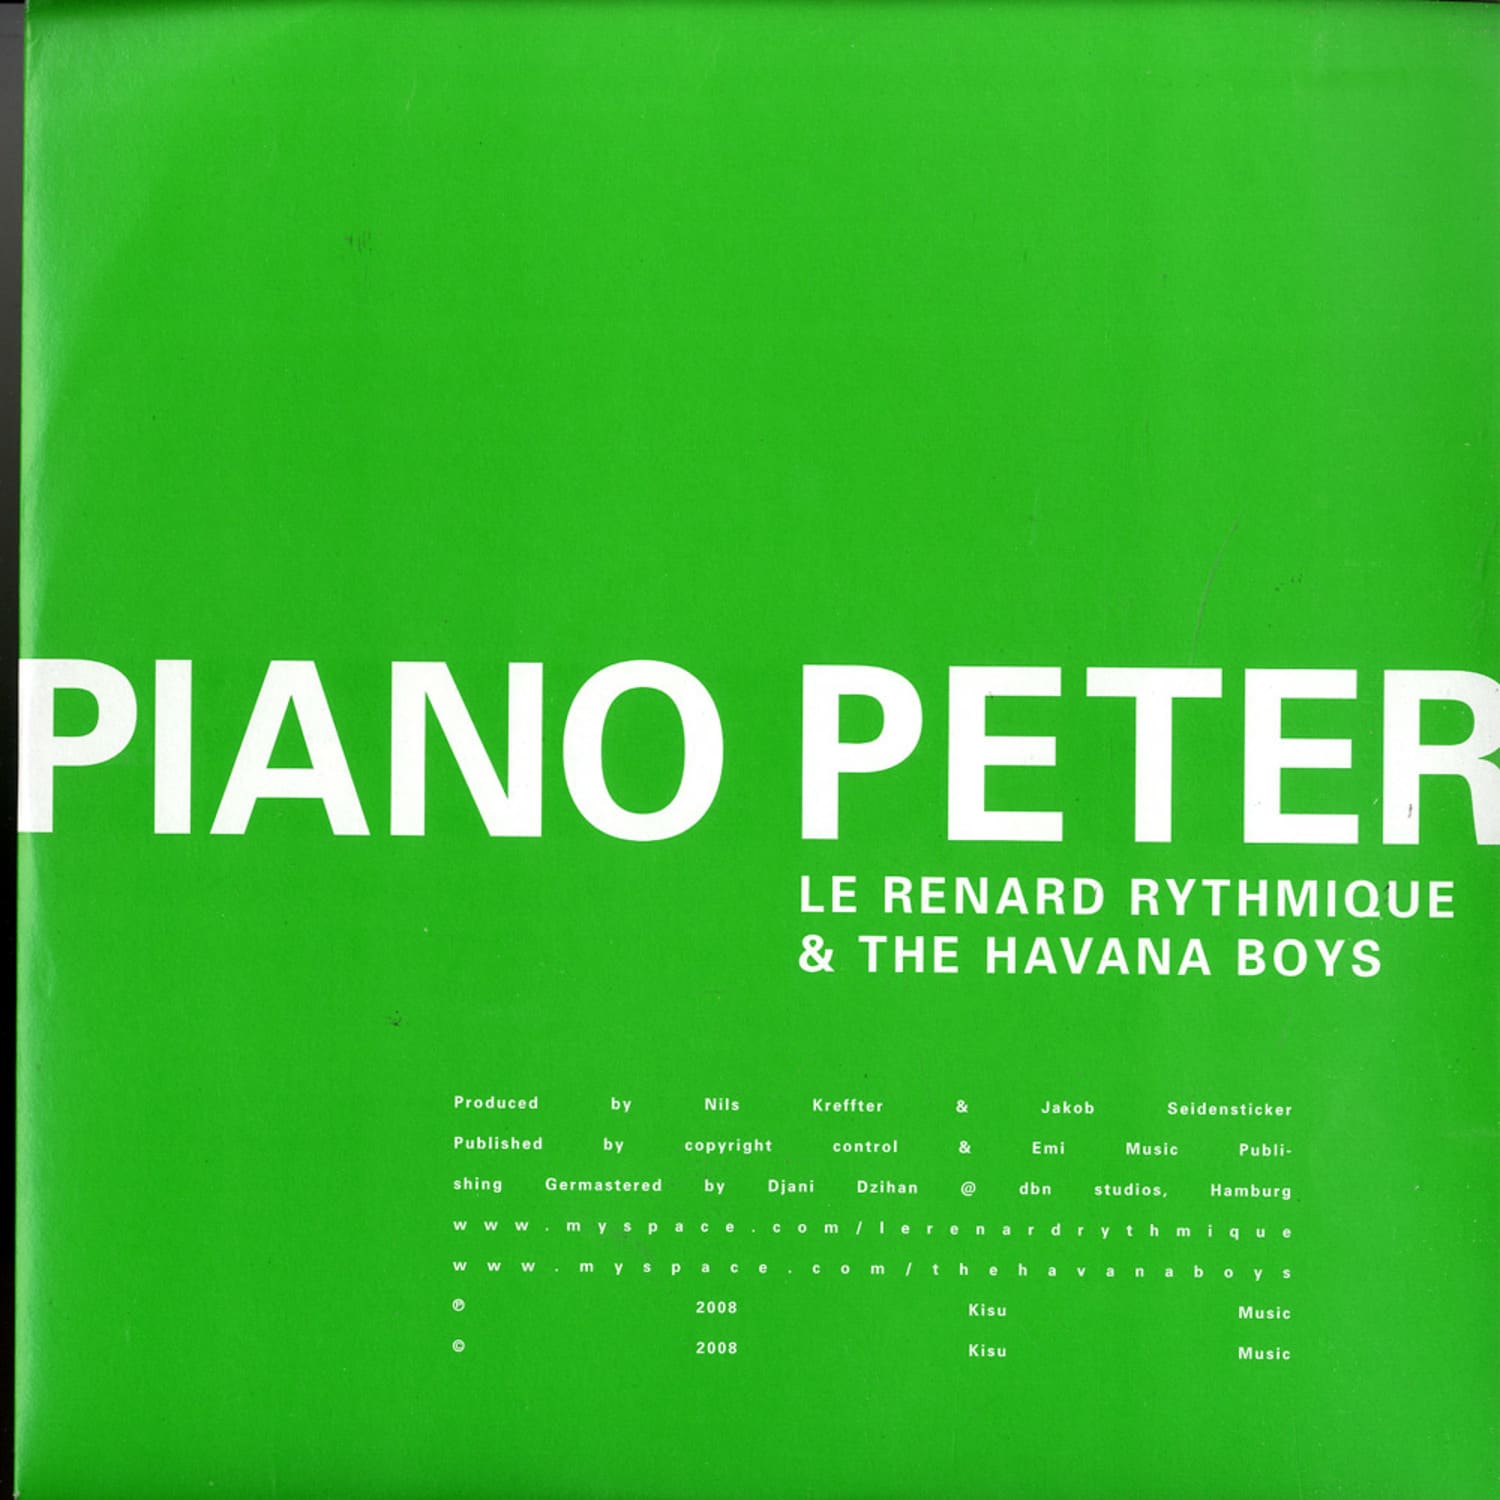 Le Renard Rythmique & The Havana Boys - PIANO PETER